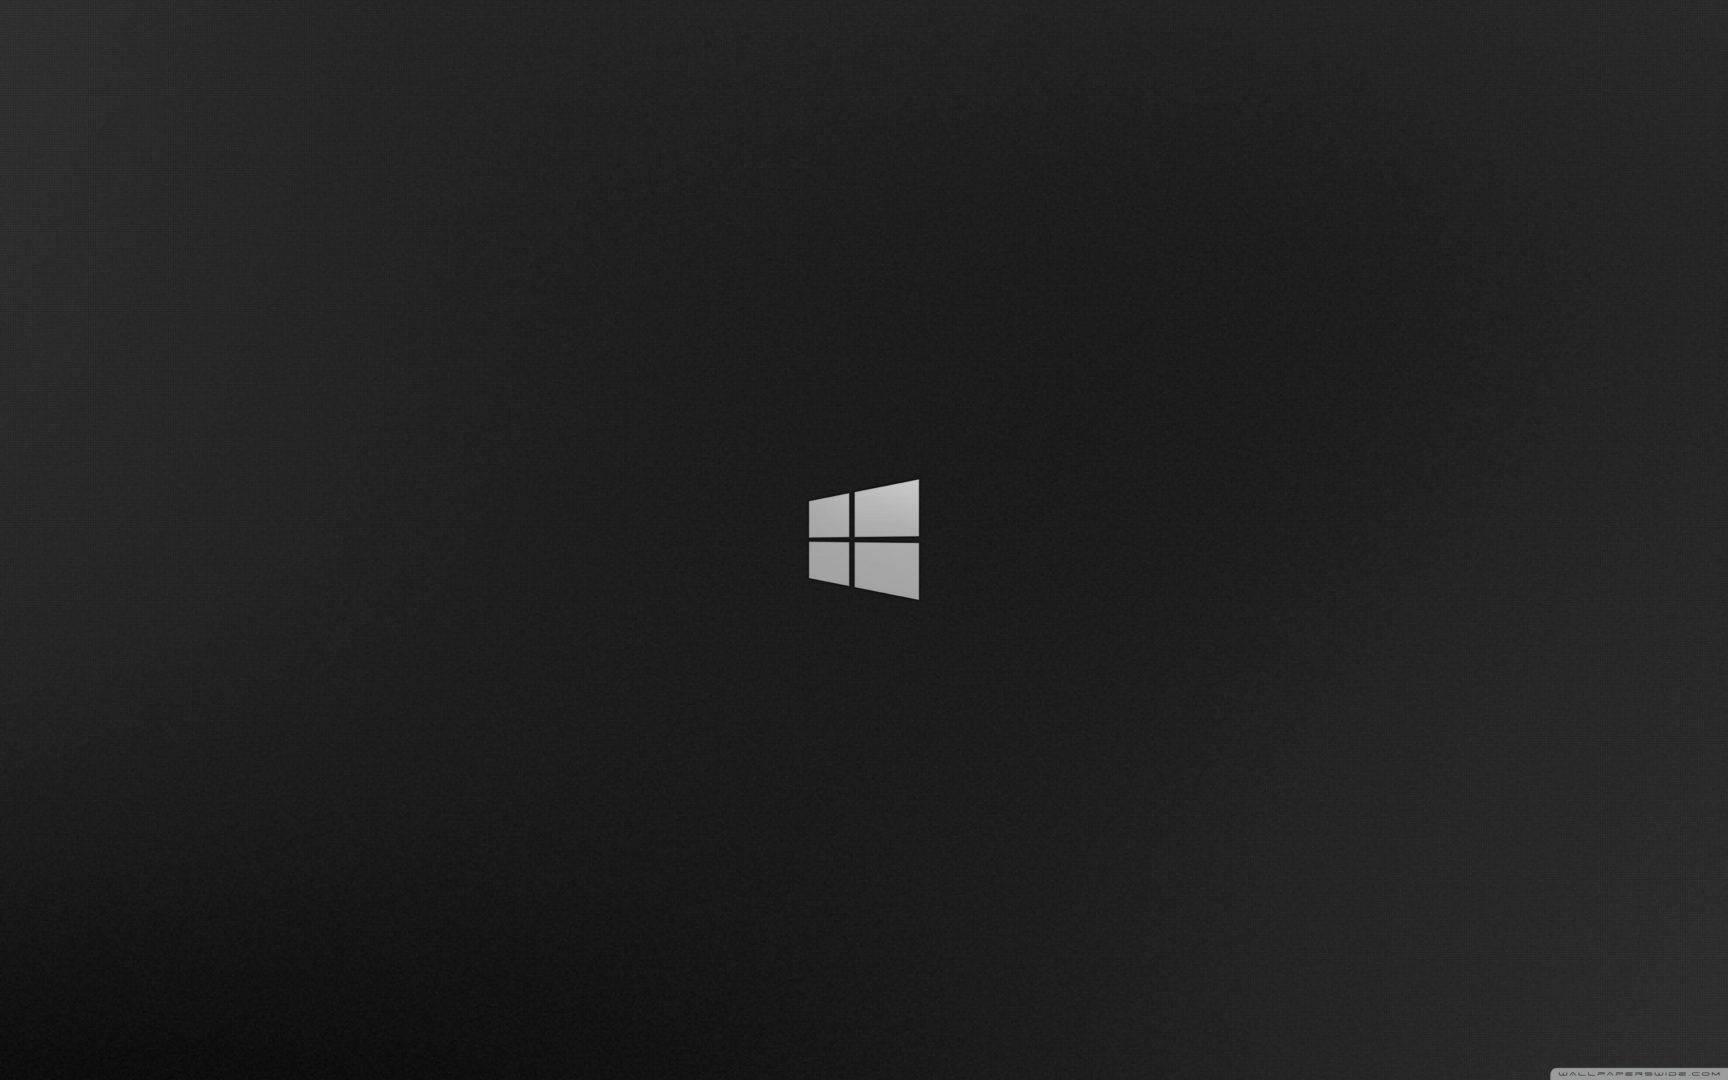 Win10 Logo On Windows 95 Background